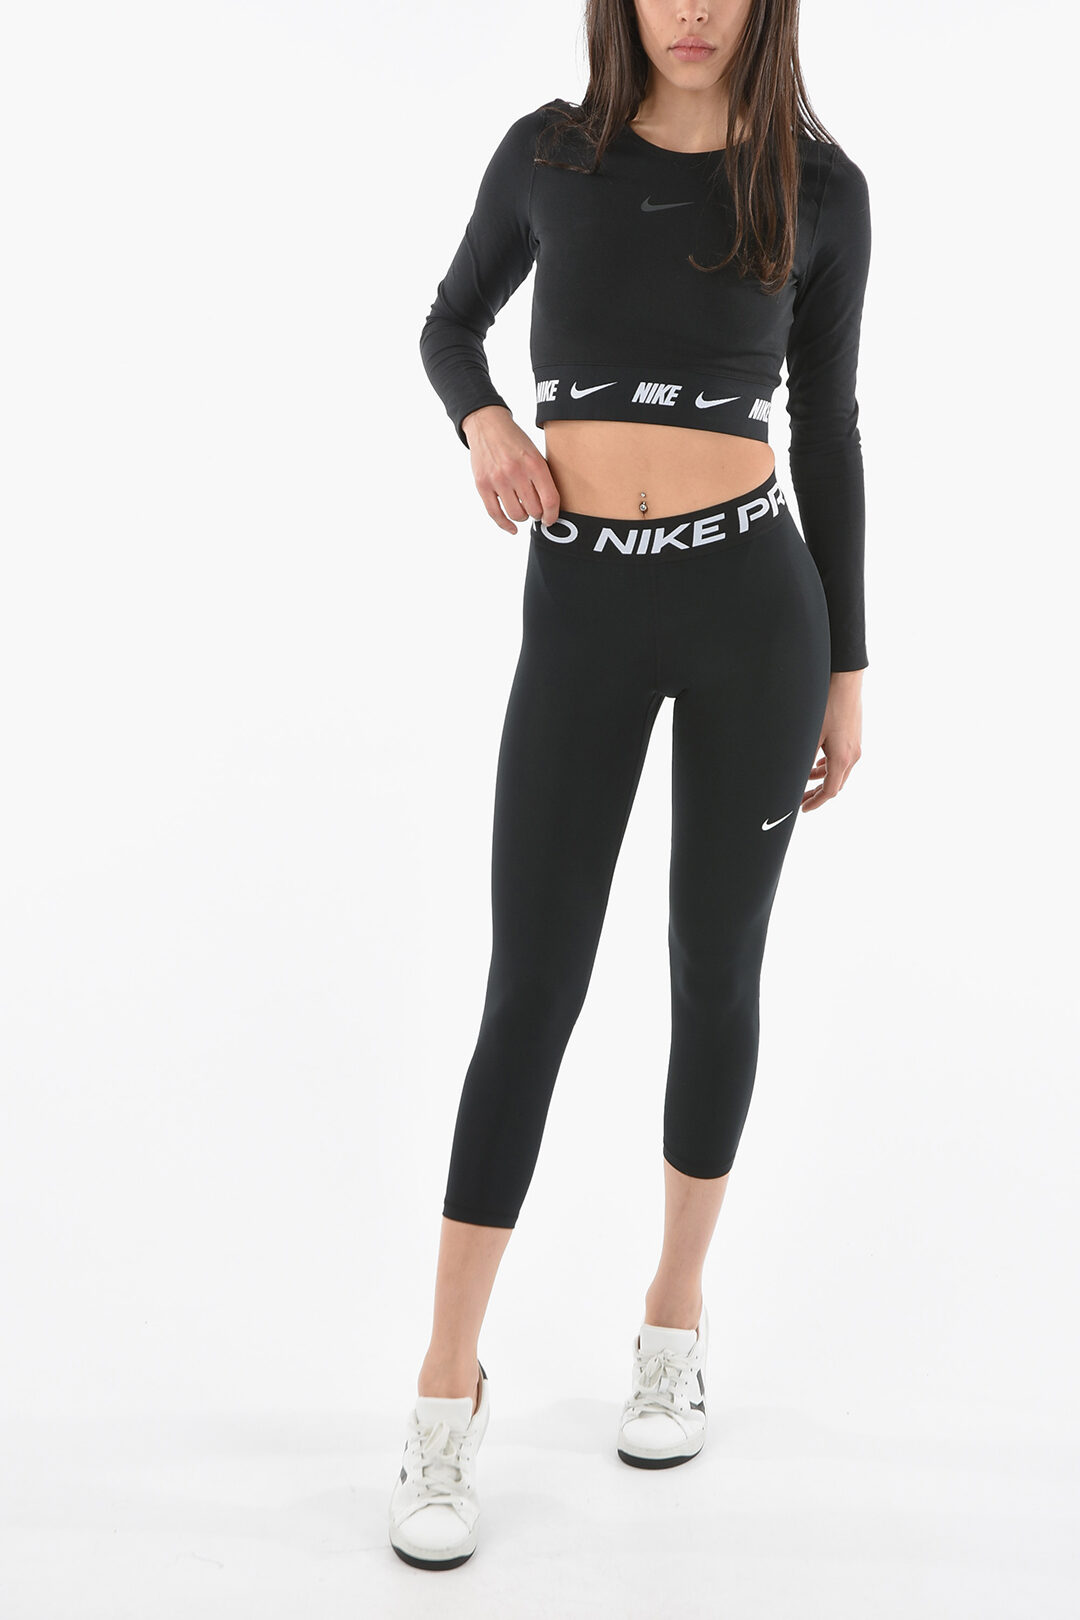 Precipicio anunciar Sensible Nike PRO Logoed At the Waist DR-FIT Leggings women - Glamood Outlet